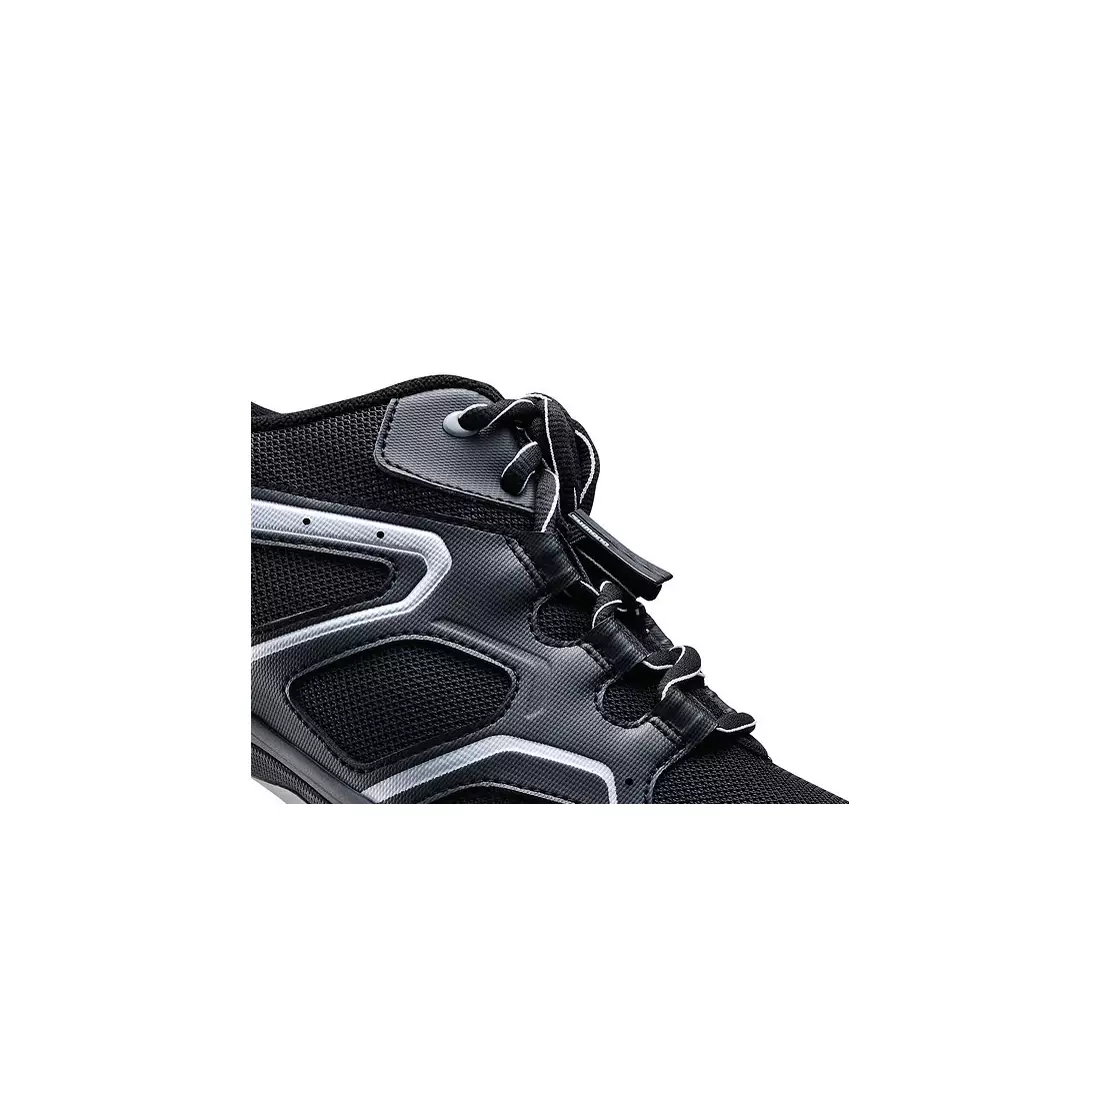 SHIMANO SH-CT40 - pantofi de ciclism recreațional cu sistemul CLICK'R